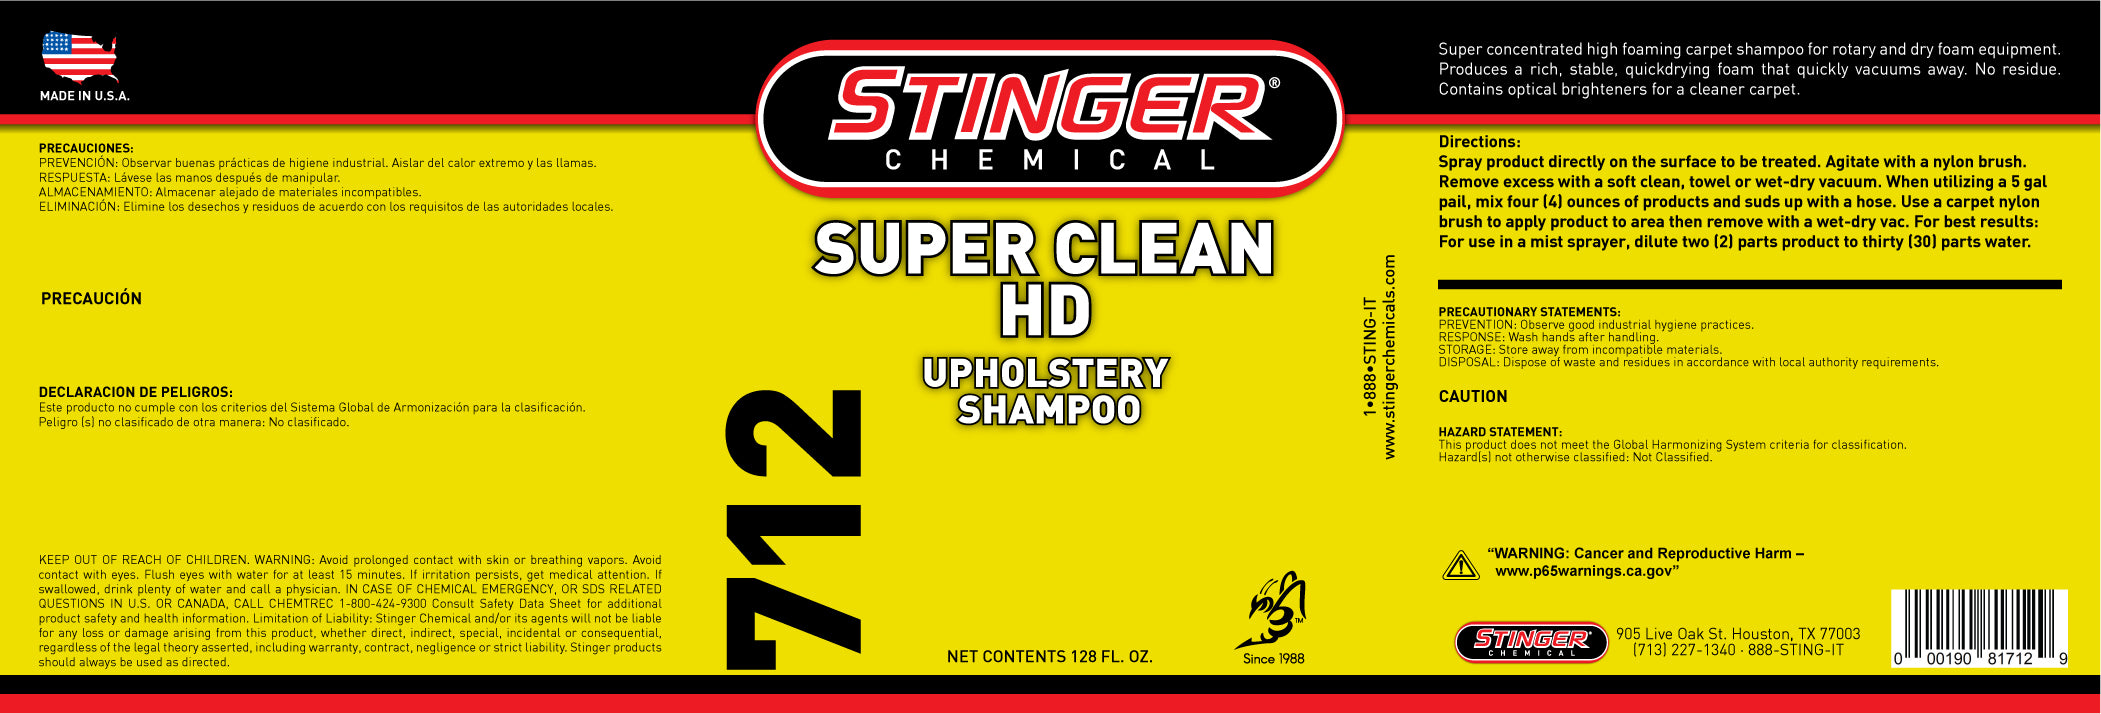 stinger-712-label